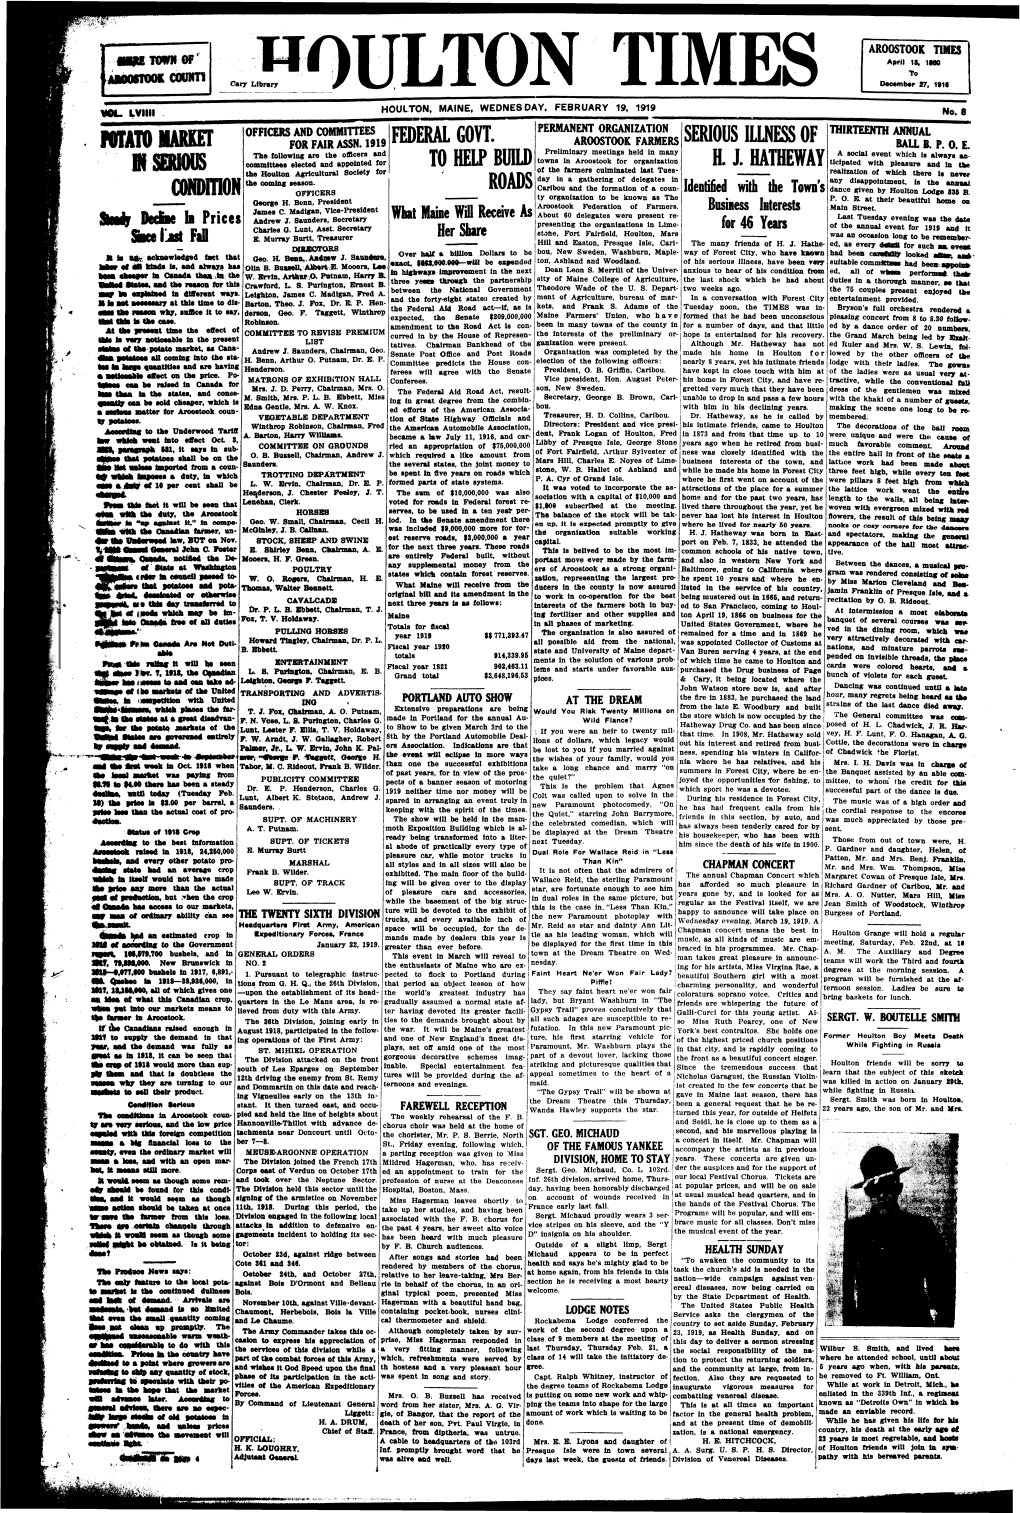 Houlton Times, February 19, 1919